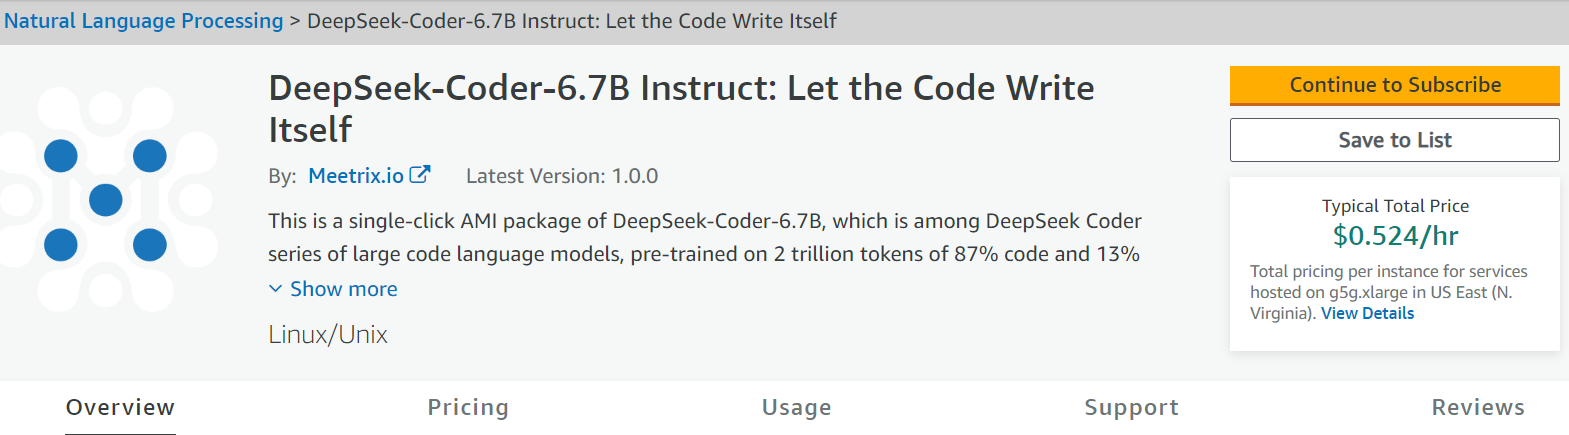 How to DeepSeek Coder on AWS